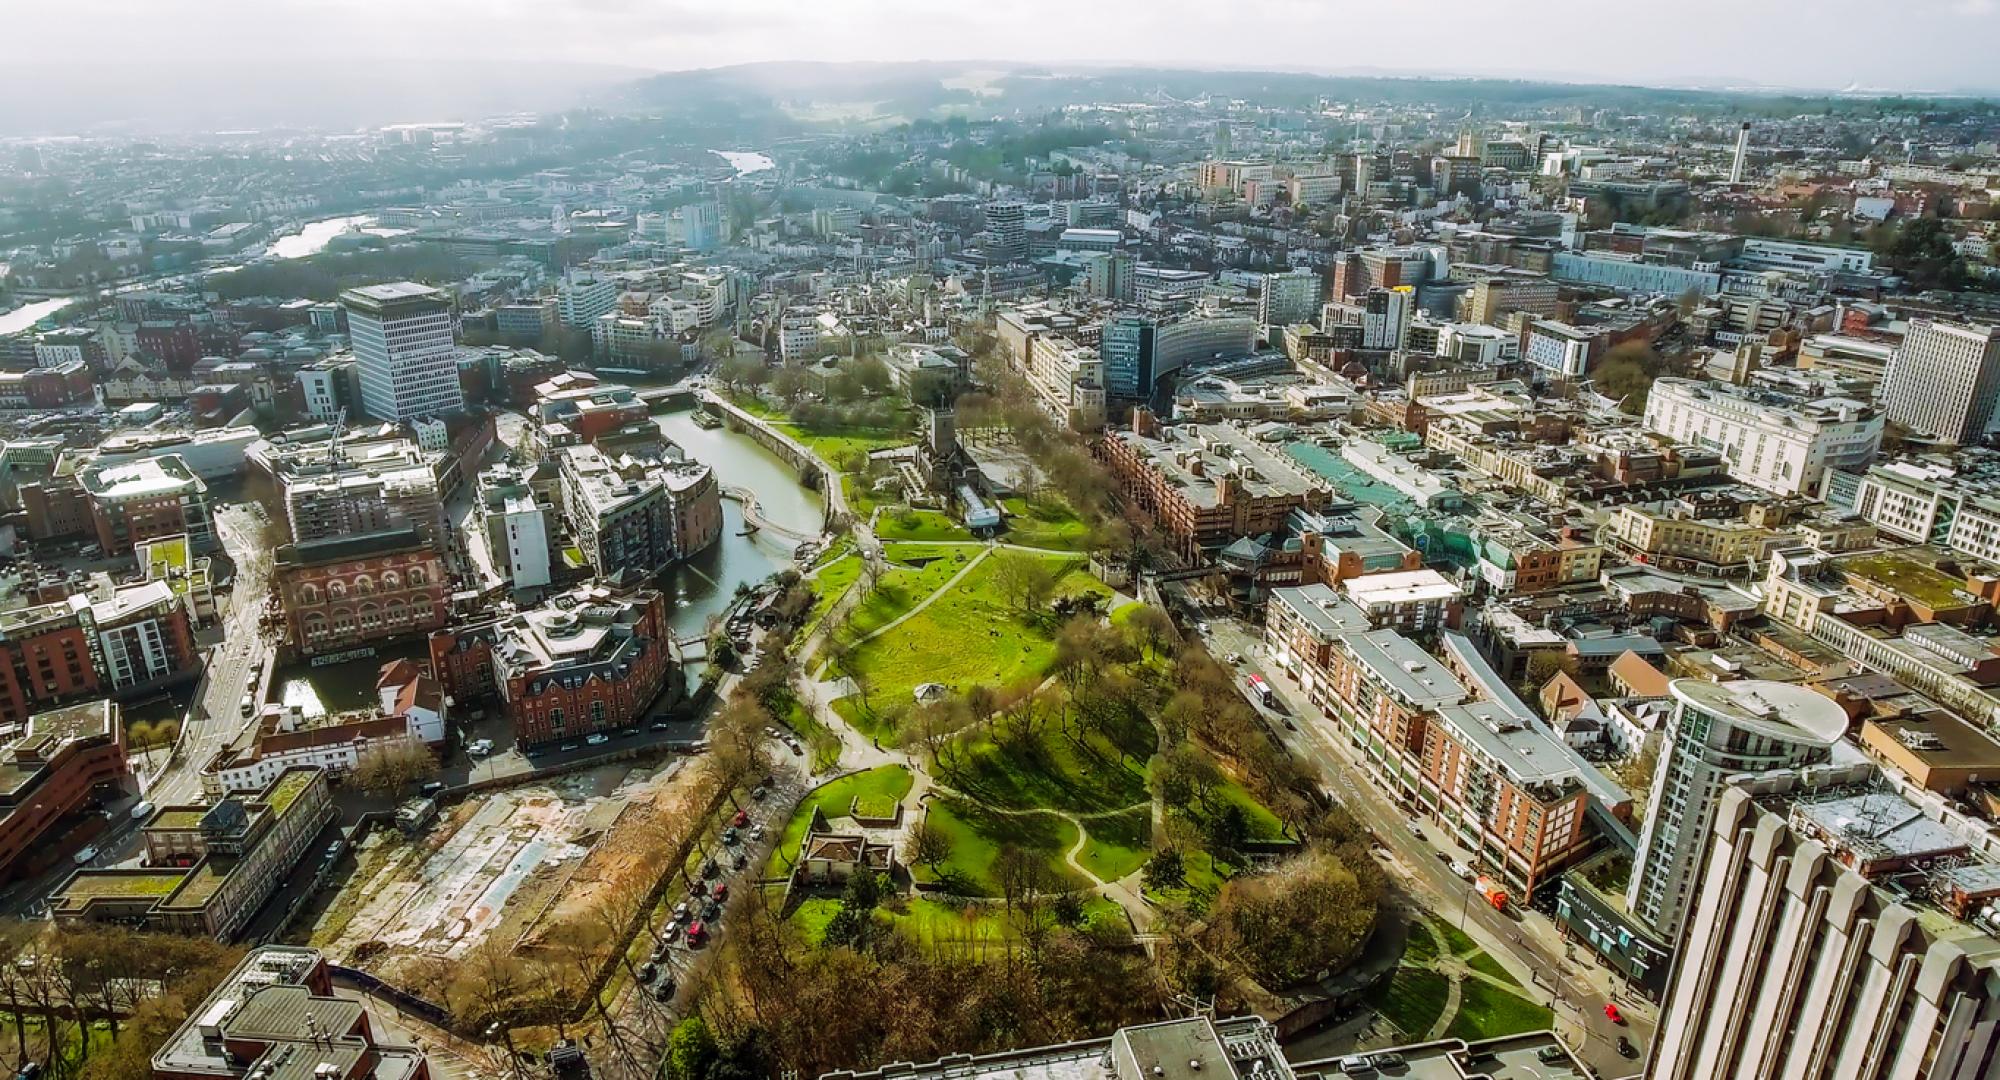 Aerial view of Bristol